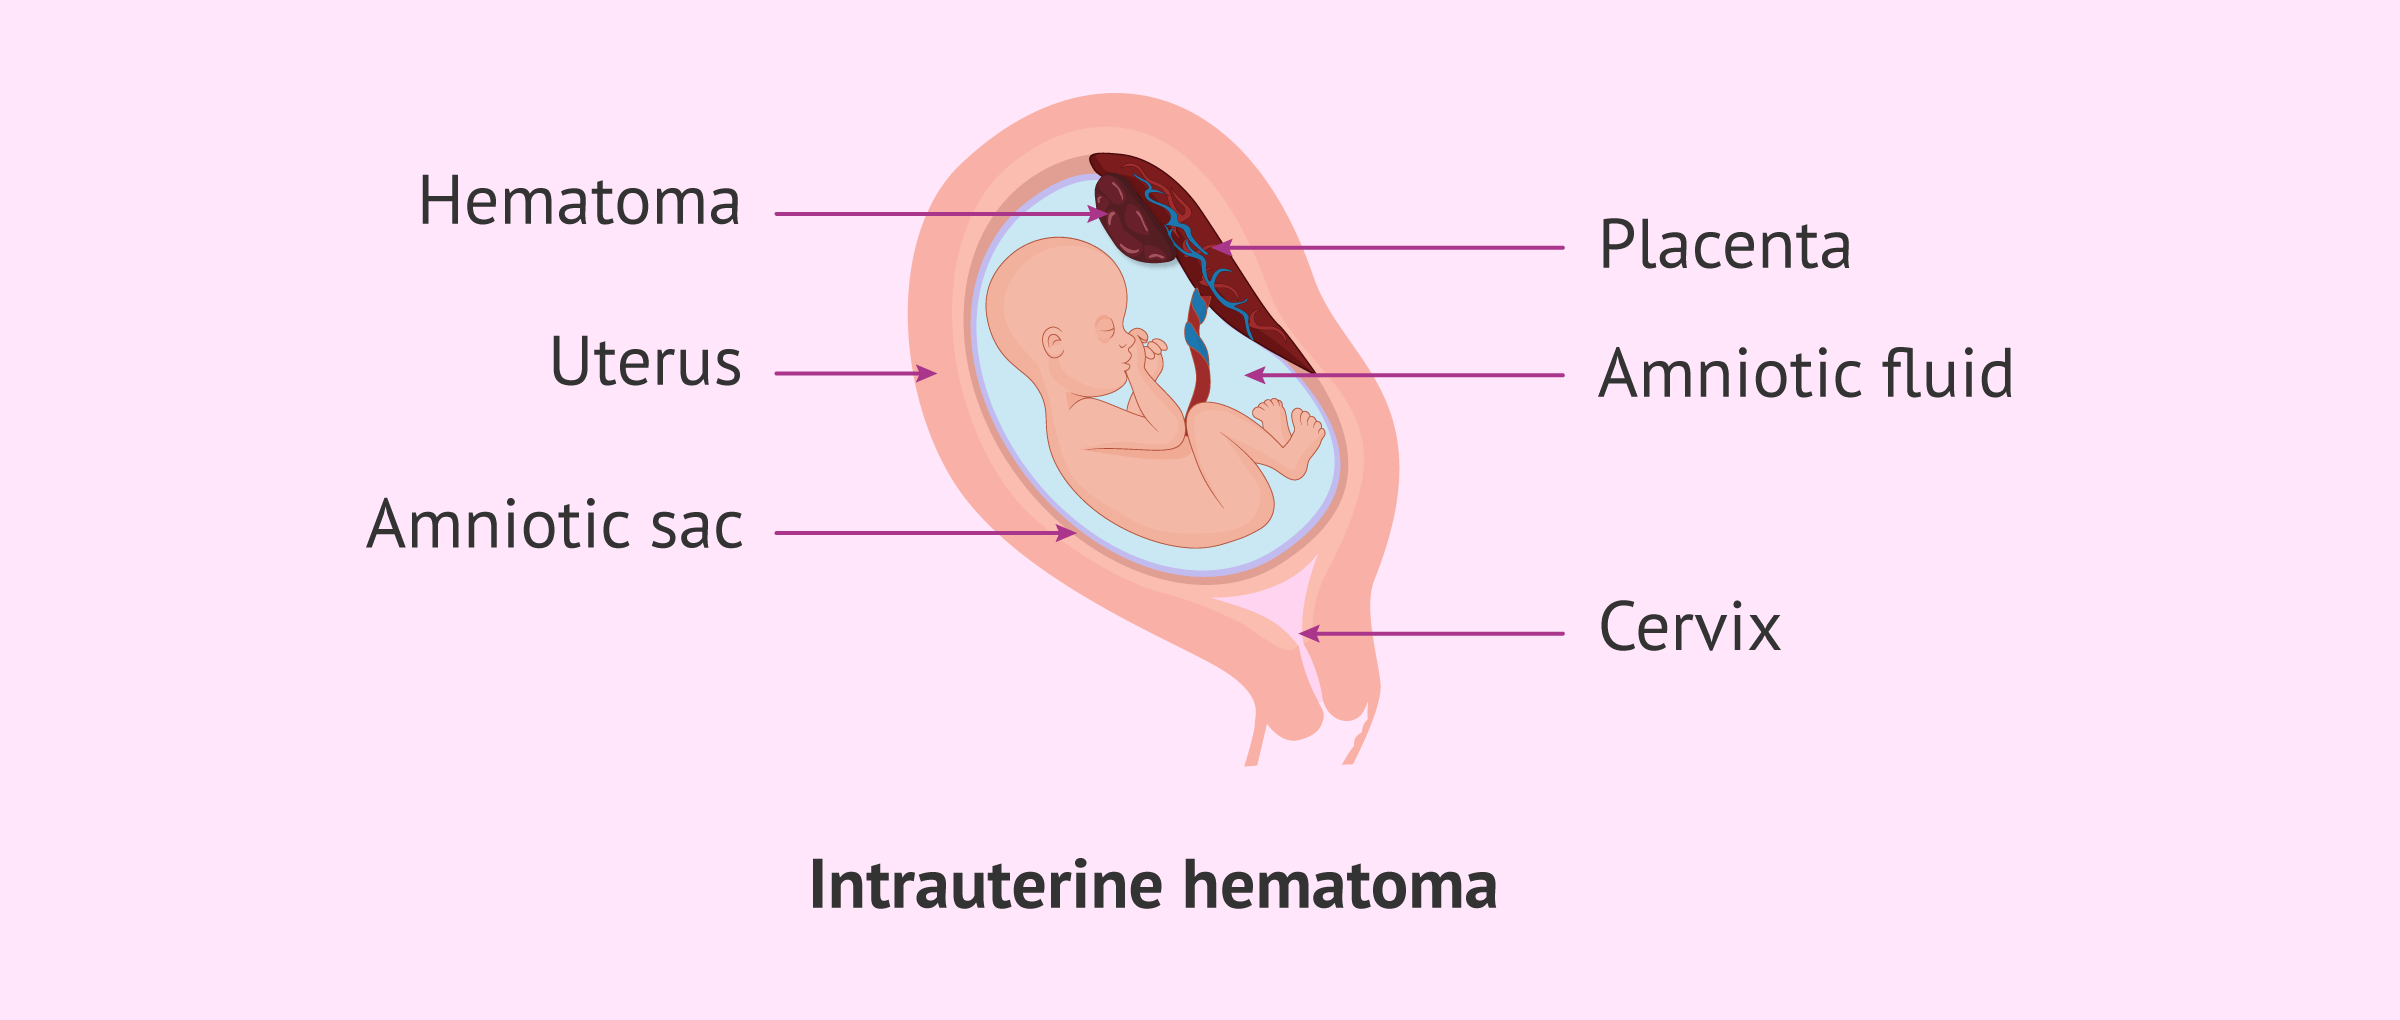 Hematoma inside the uterus during pregnancy